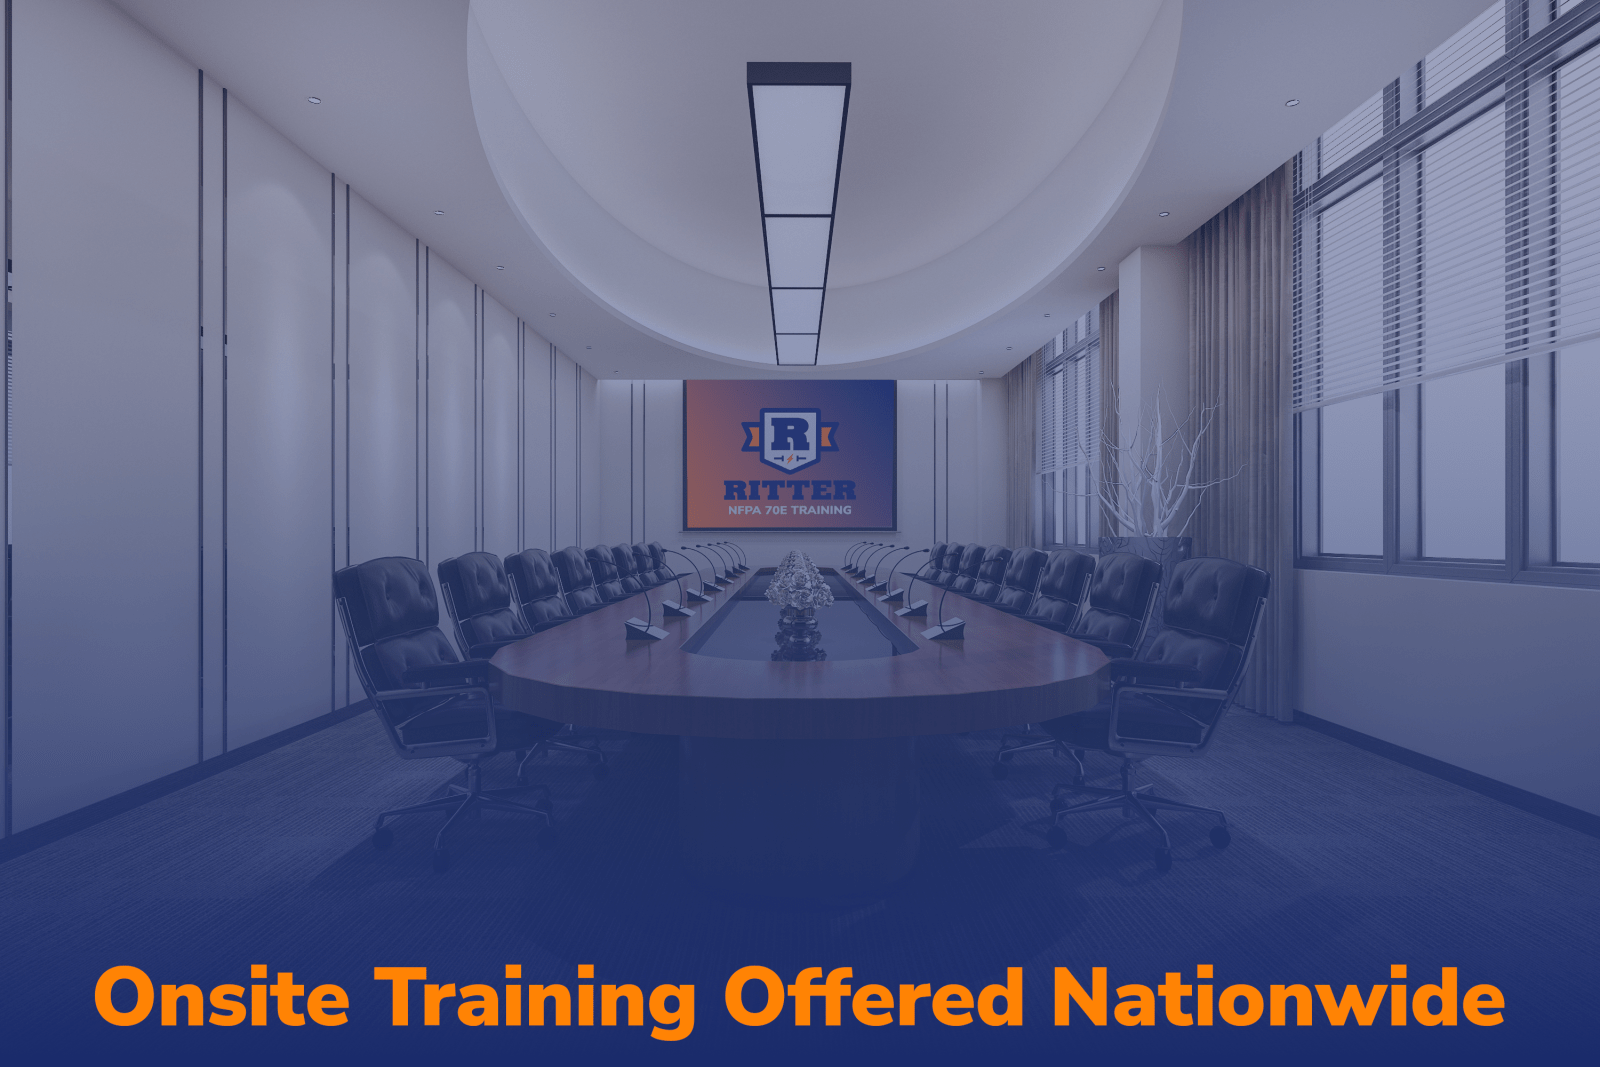 Onsite Training Arc Flash and NFPA 70E Training Nationwide 